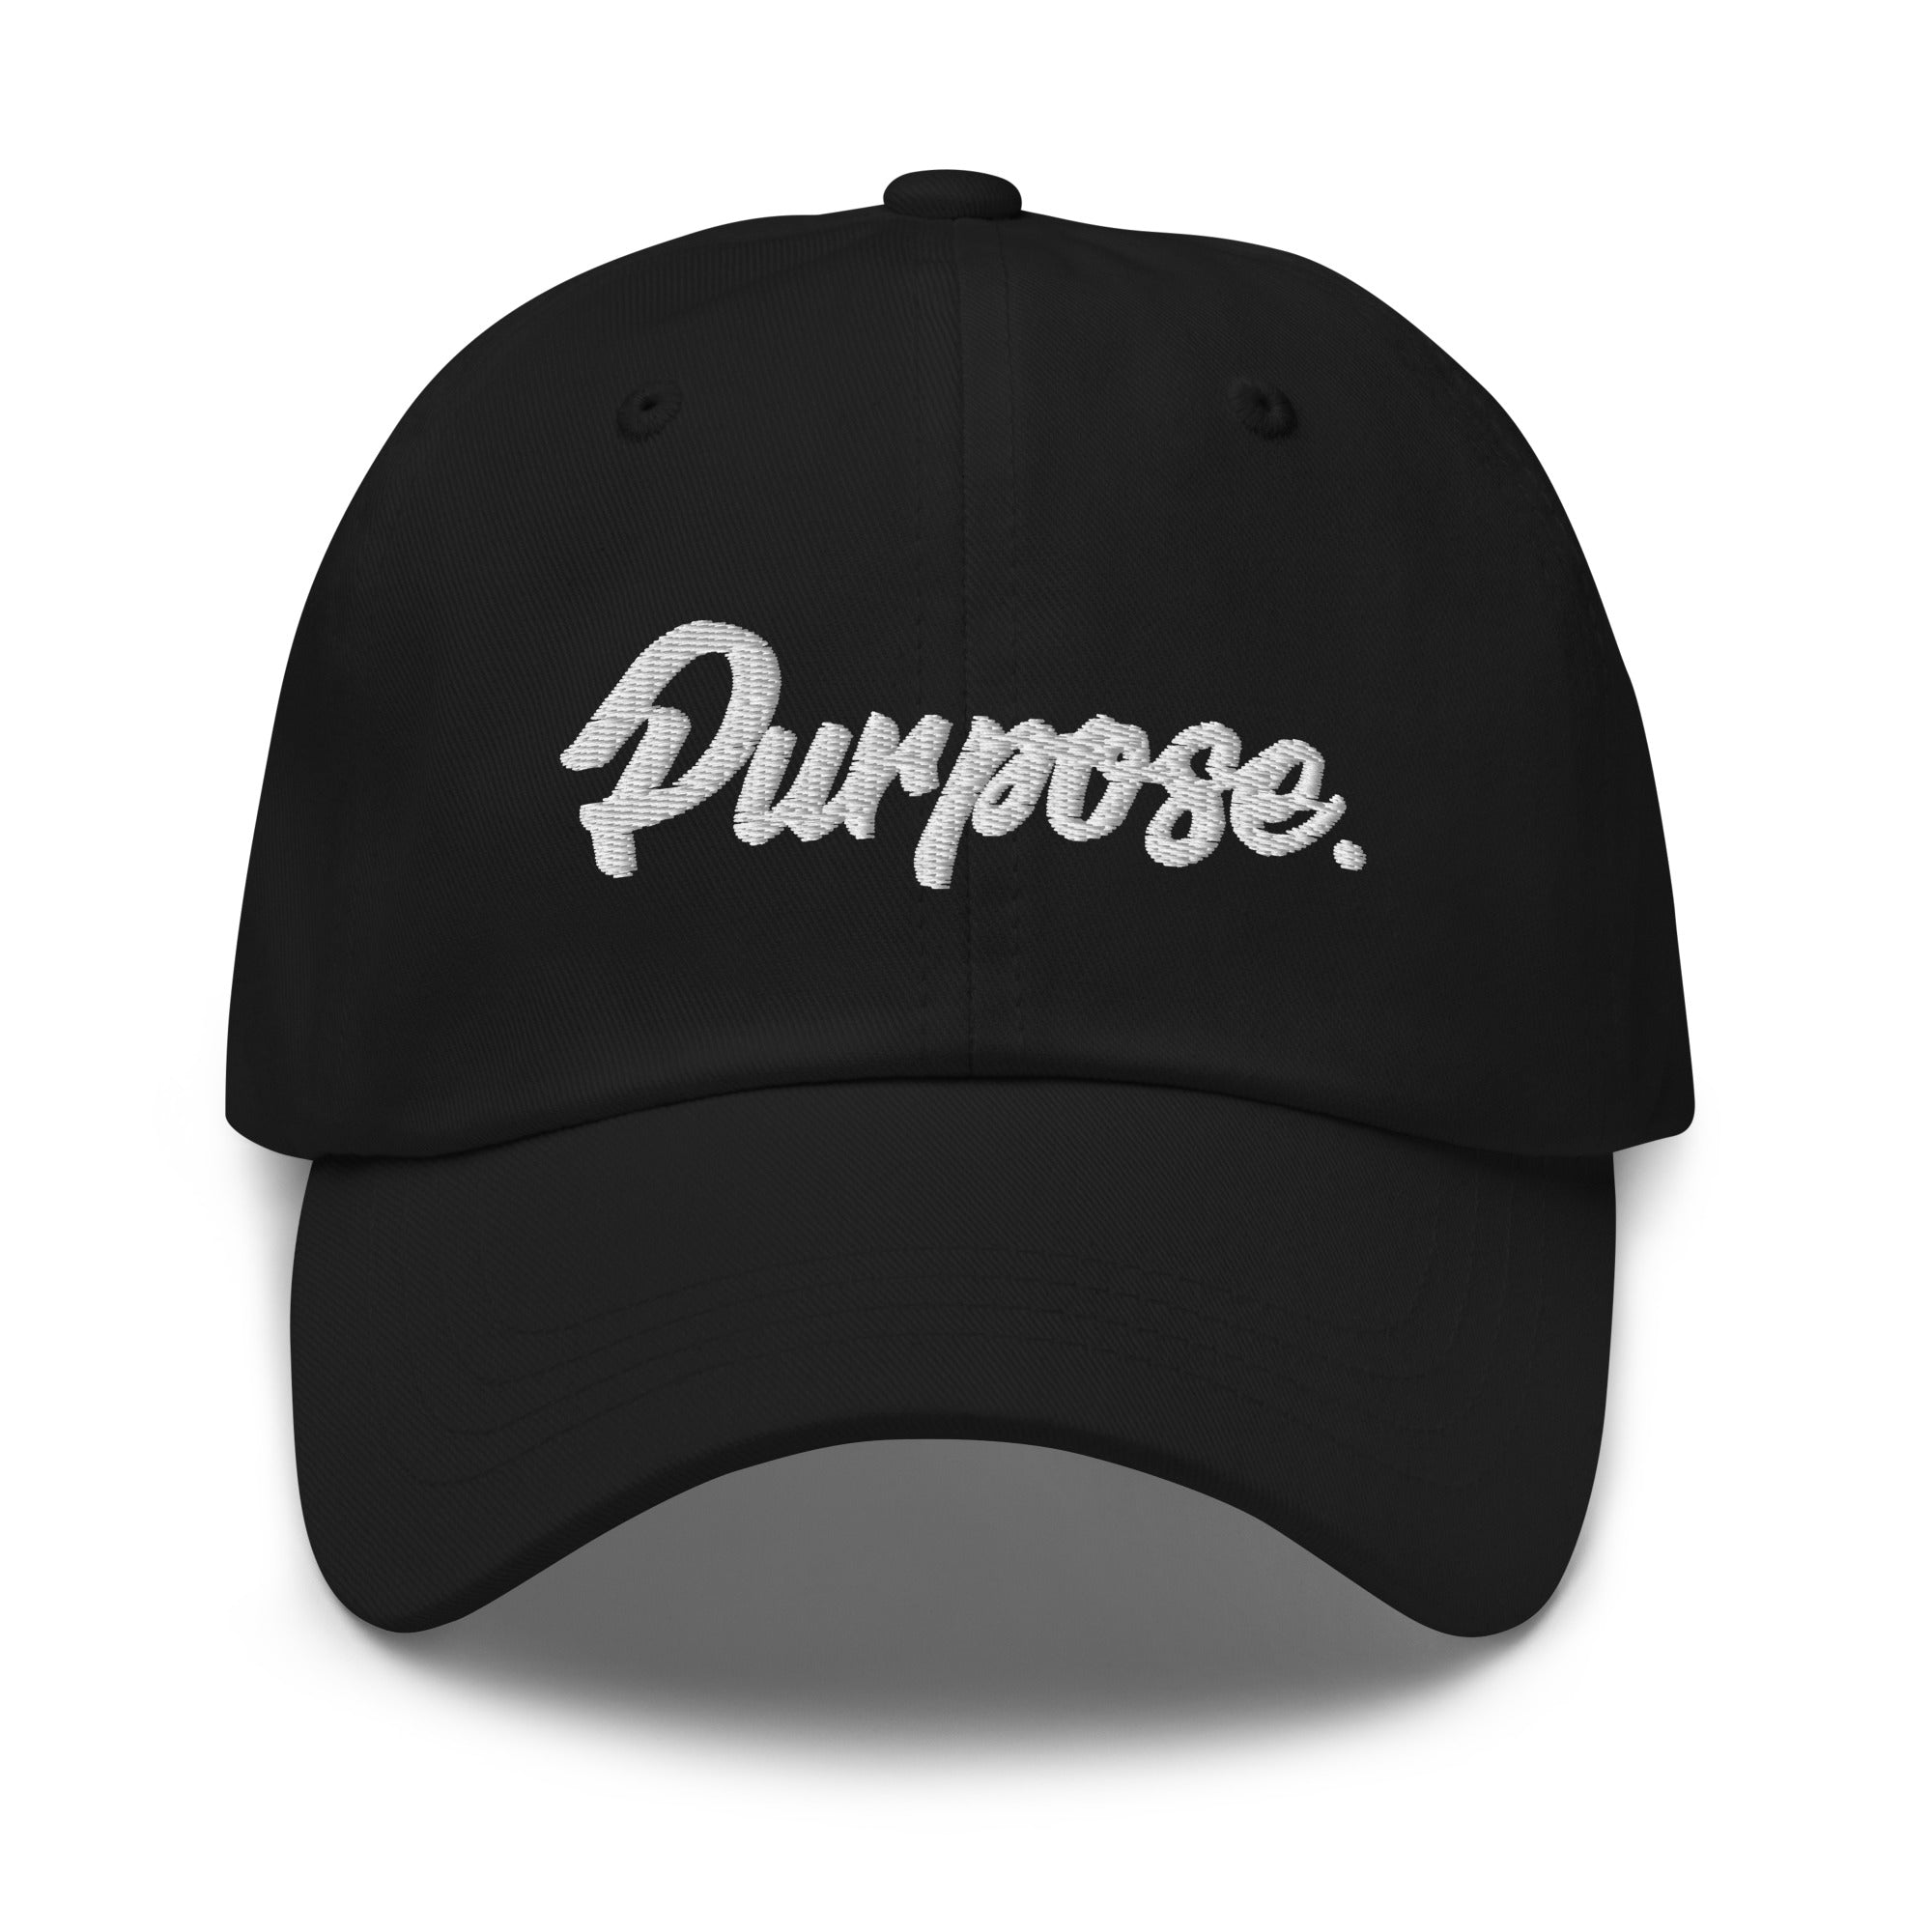 Purpose. Dad hat